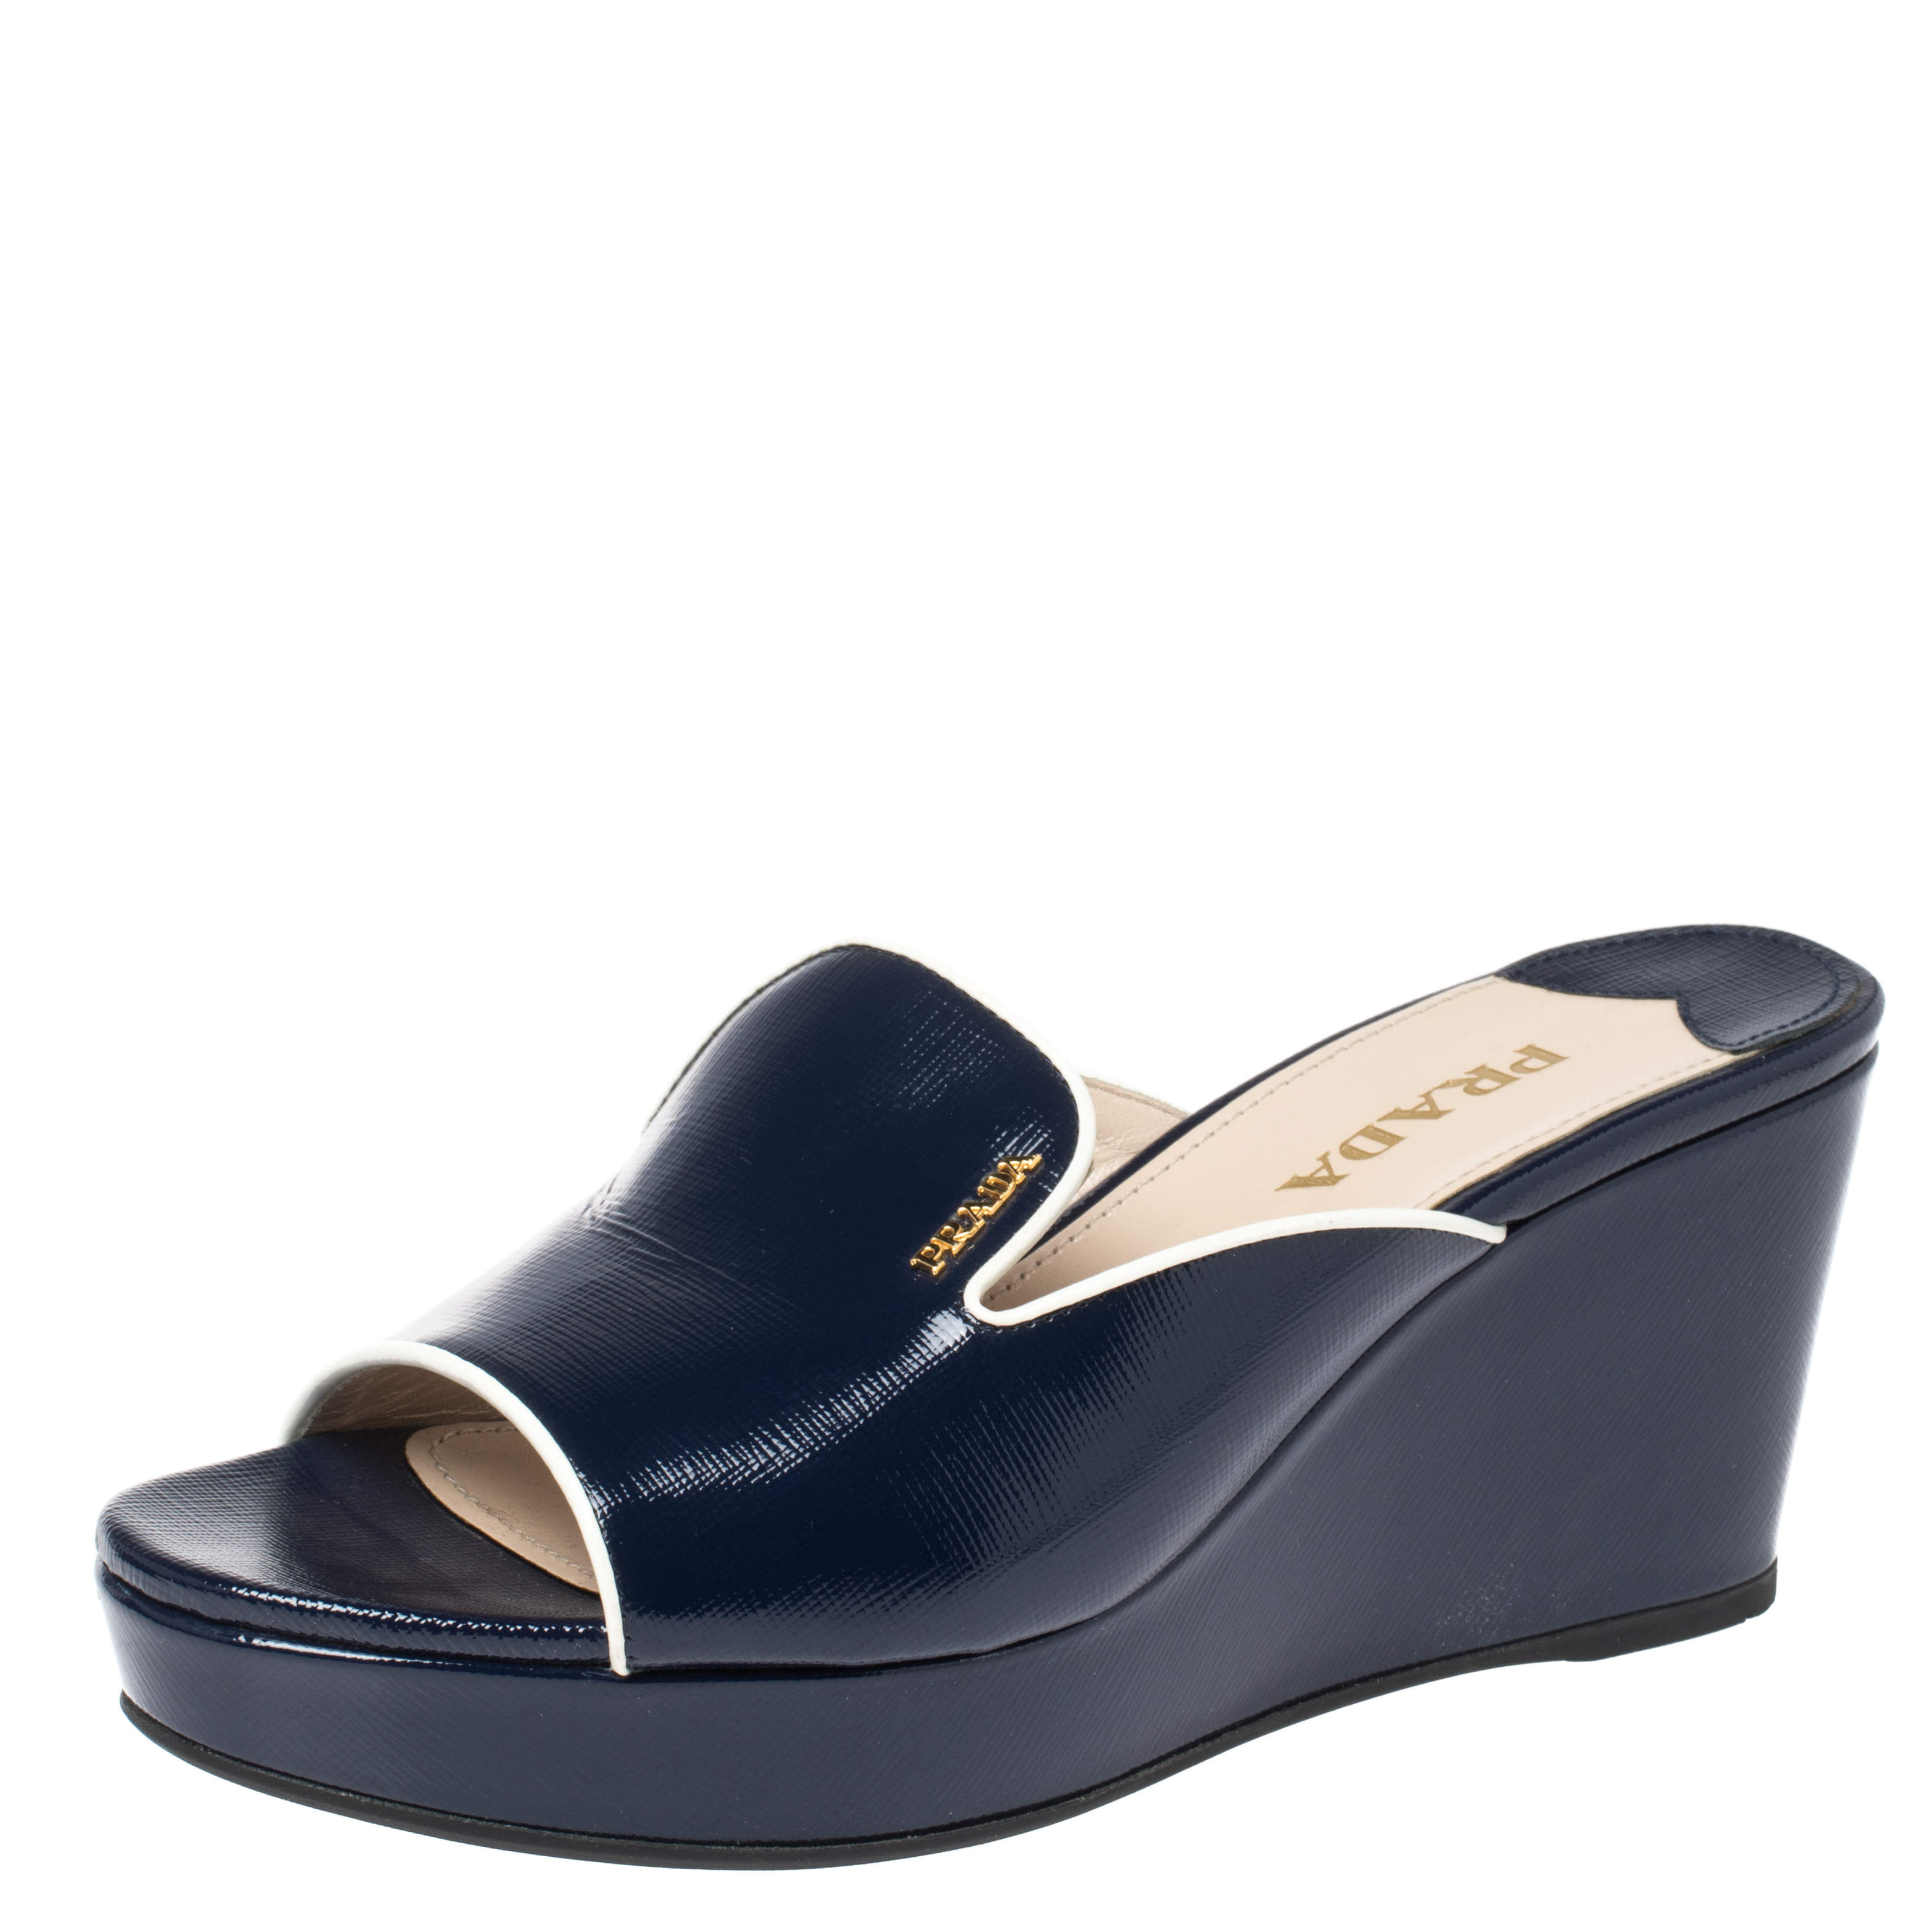 Prada Blue Patent Leather Wedge Slide Sandal Size 39